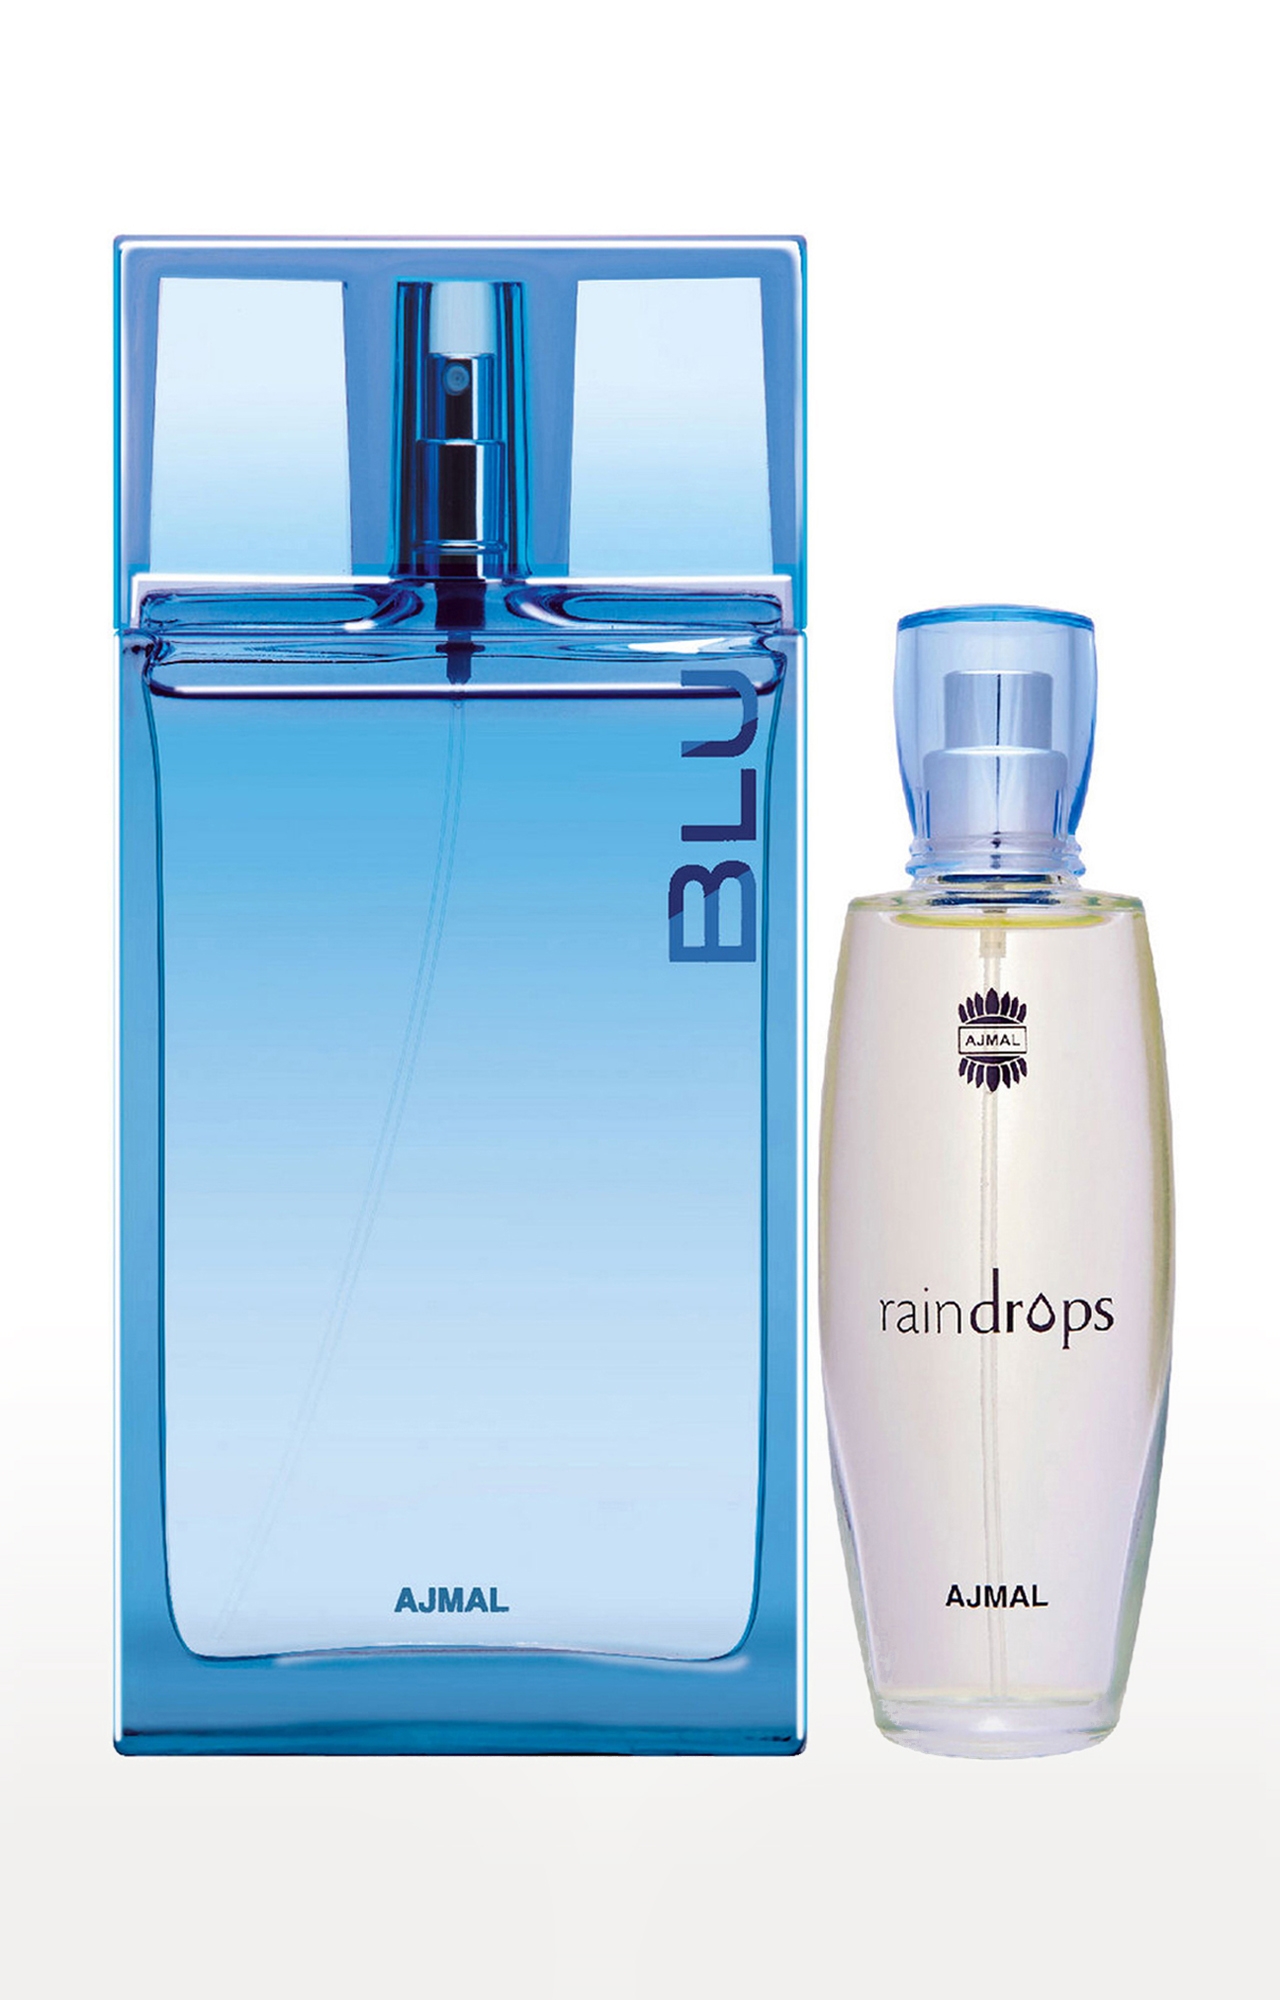 Ajmal Blu EDP Aquatic Perfume 90ml for Men and Raindrops EDP Perfume 50ml for Women